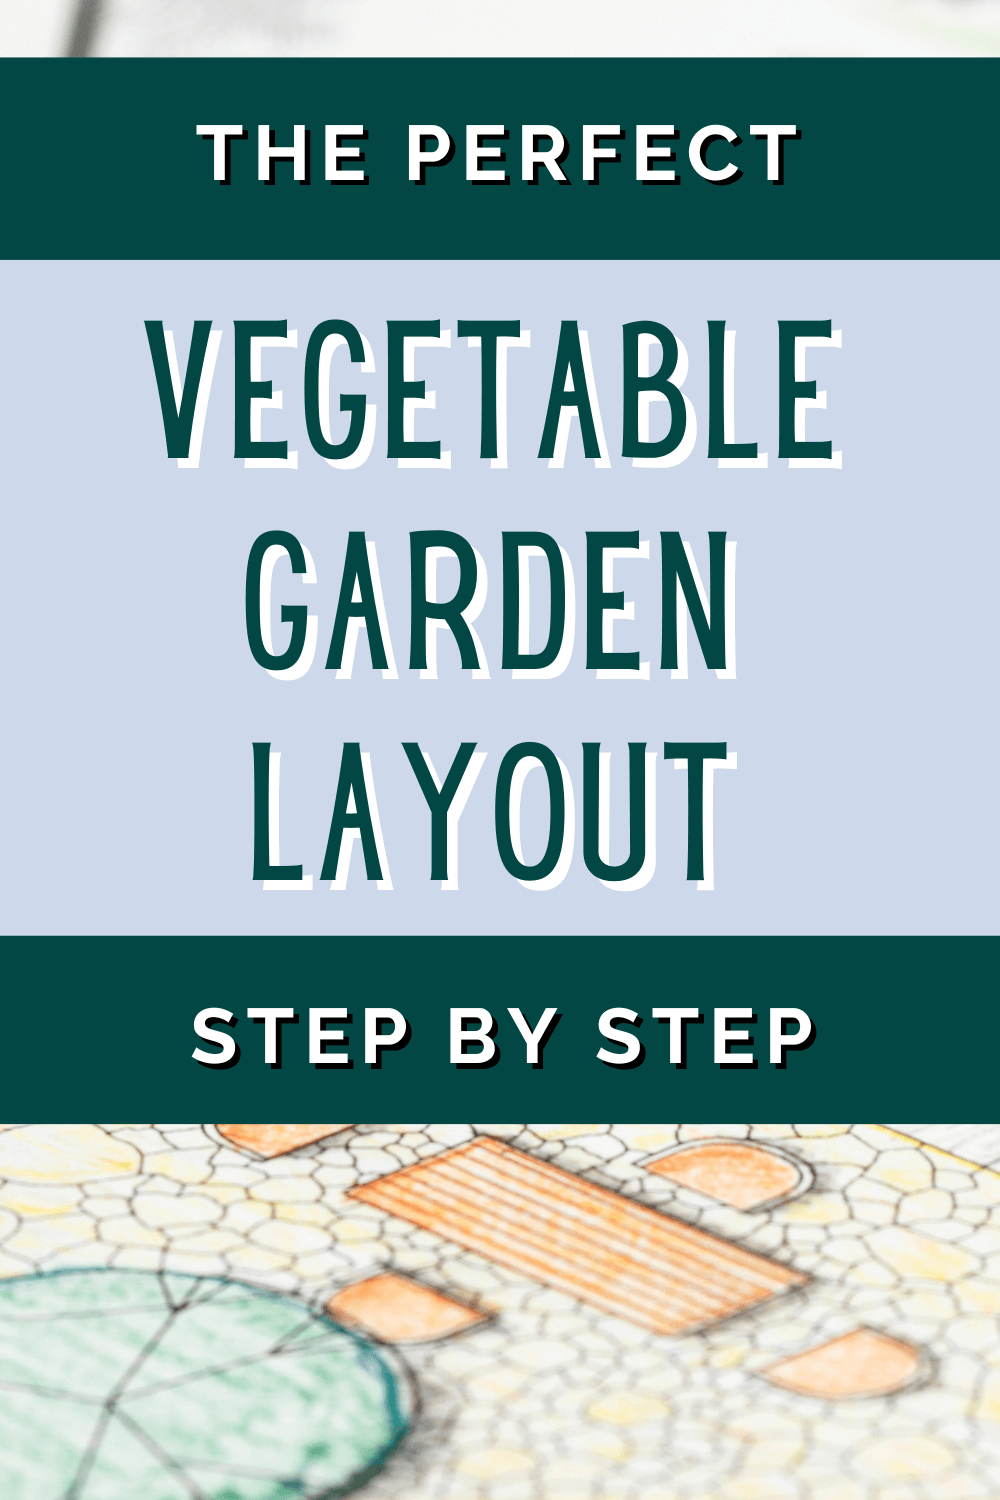 How To Design An Urban Vegetable Garden Layout Plan A Vegetable Garden How To Create An Urban Garden 4 